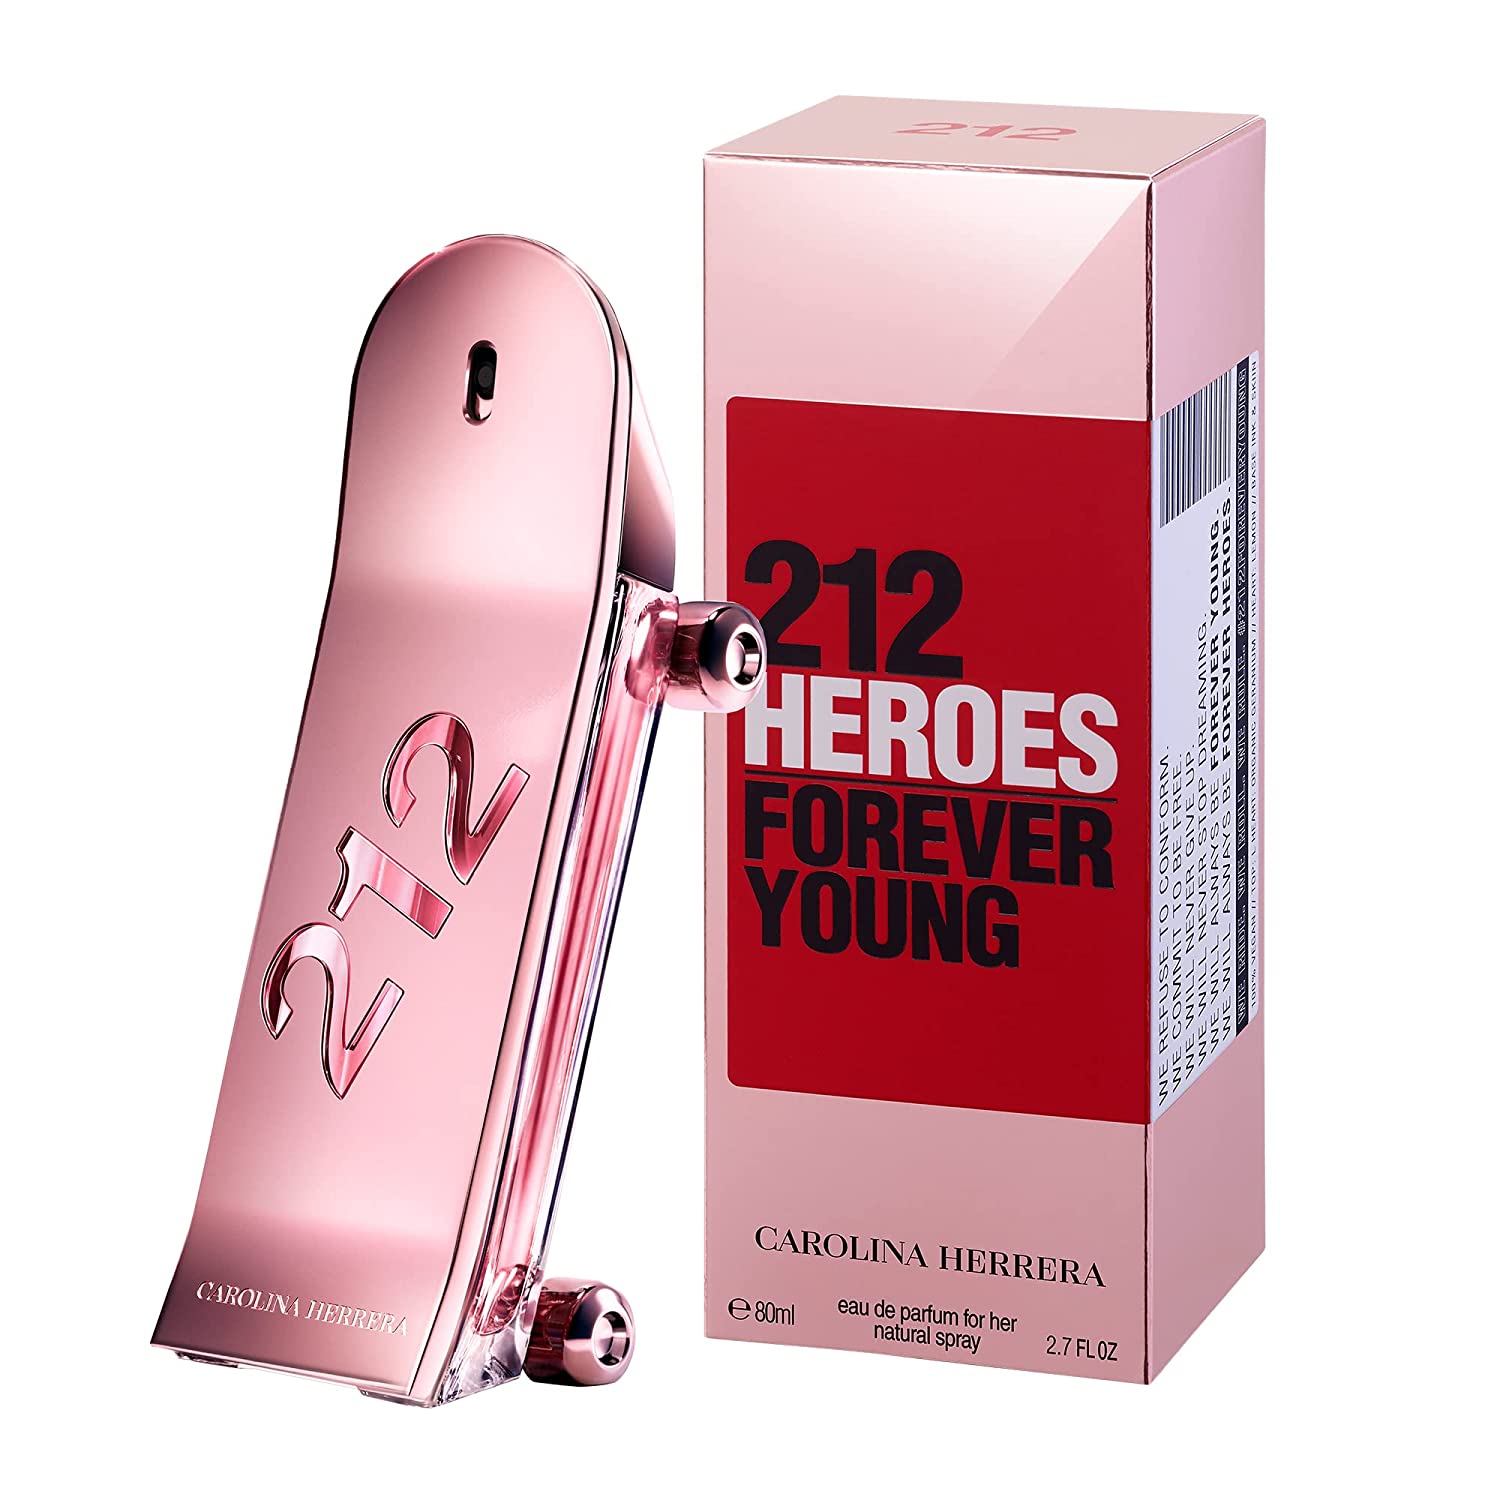 Carolina Herrera 212 Heroes Forever Young for Her Eau de Parfum